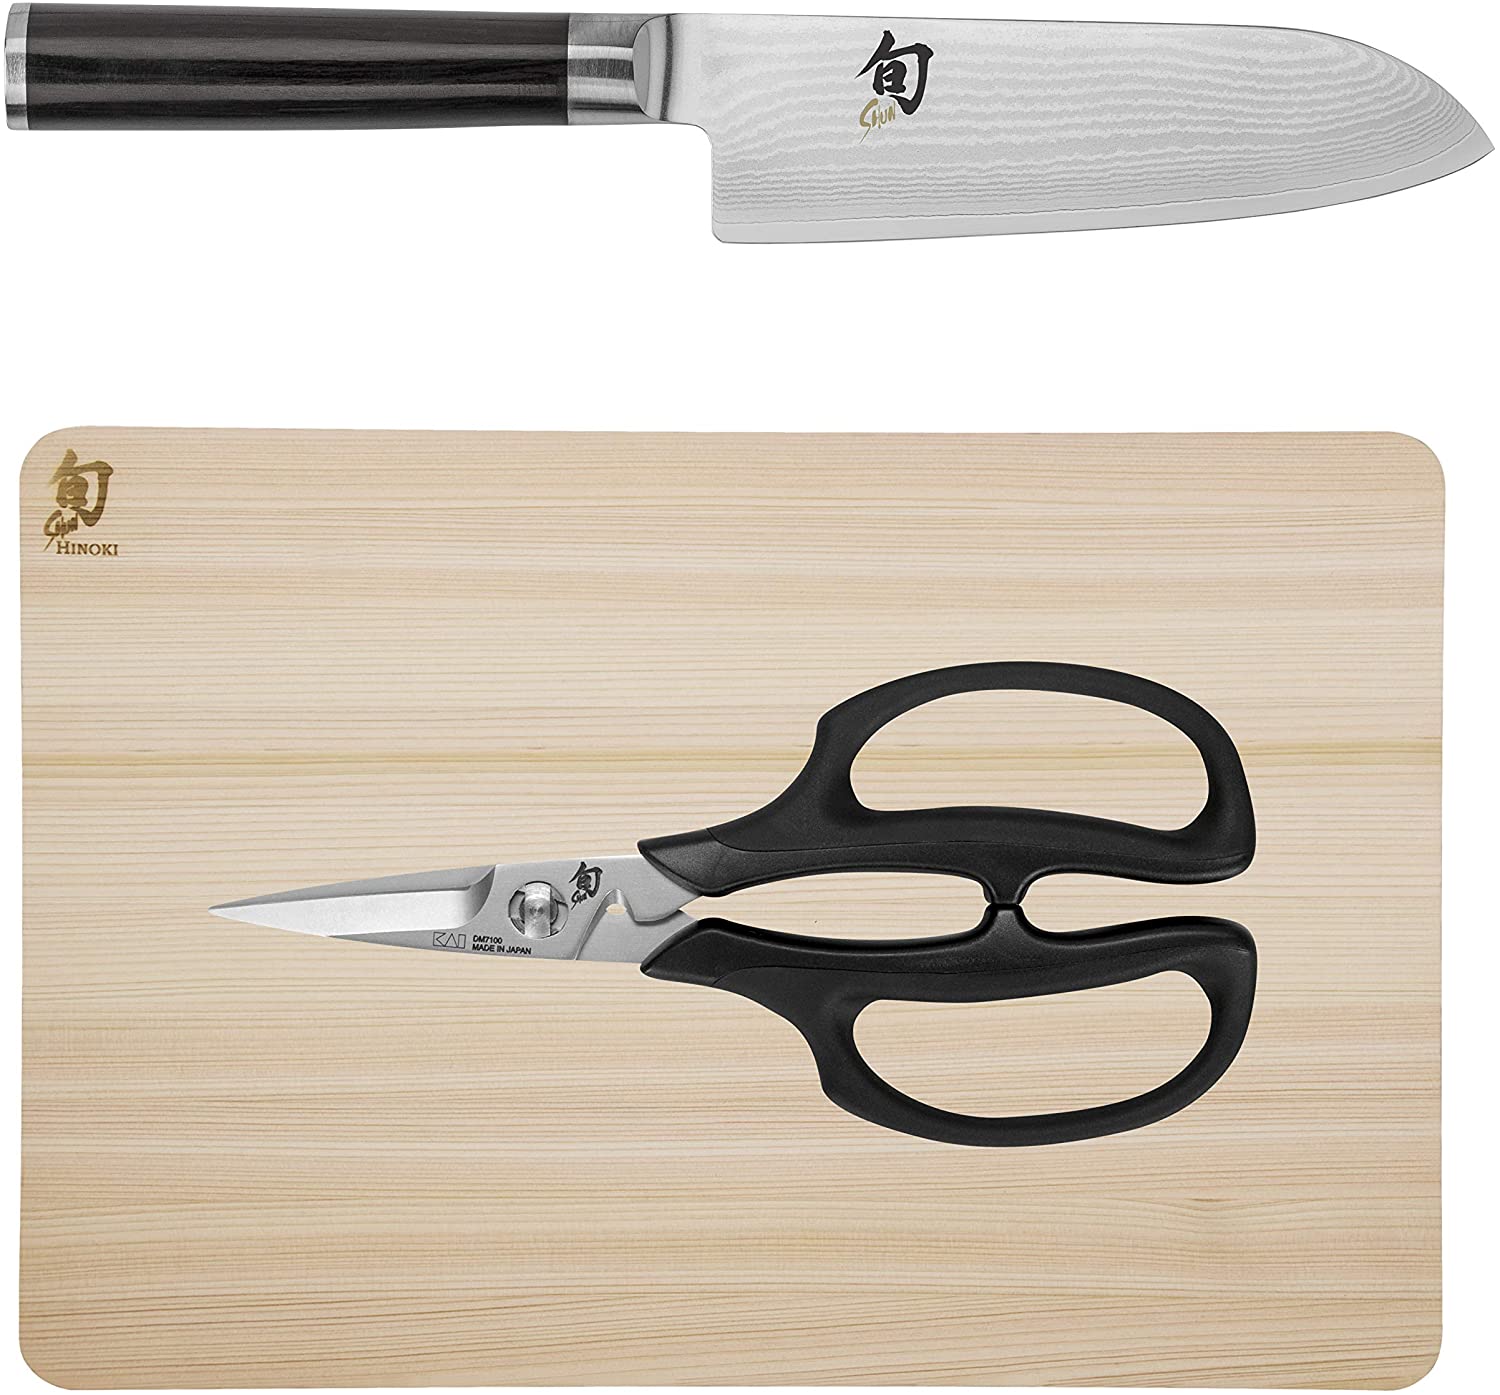 Shun Classic Set 5.5-inch Santoku Knife, Herb Shears, and Hinoki Cutting Board DMS0310